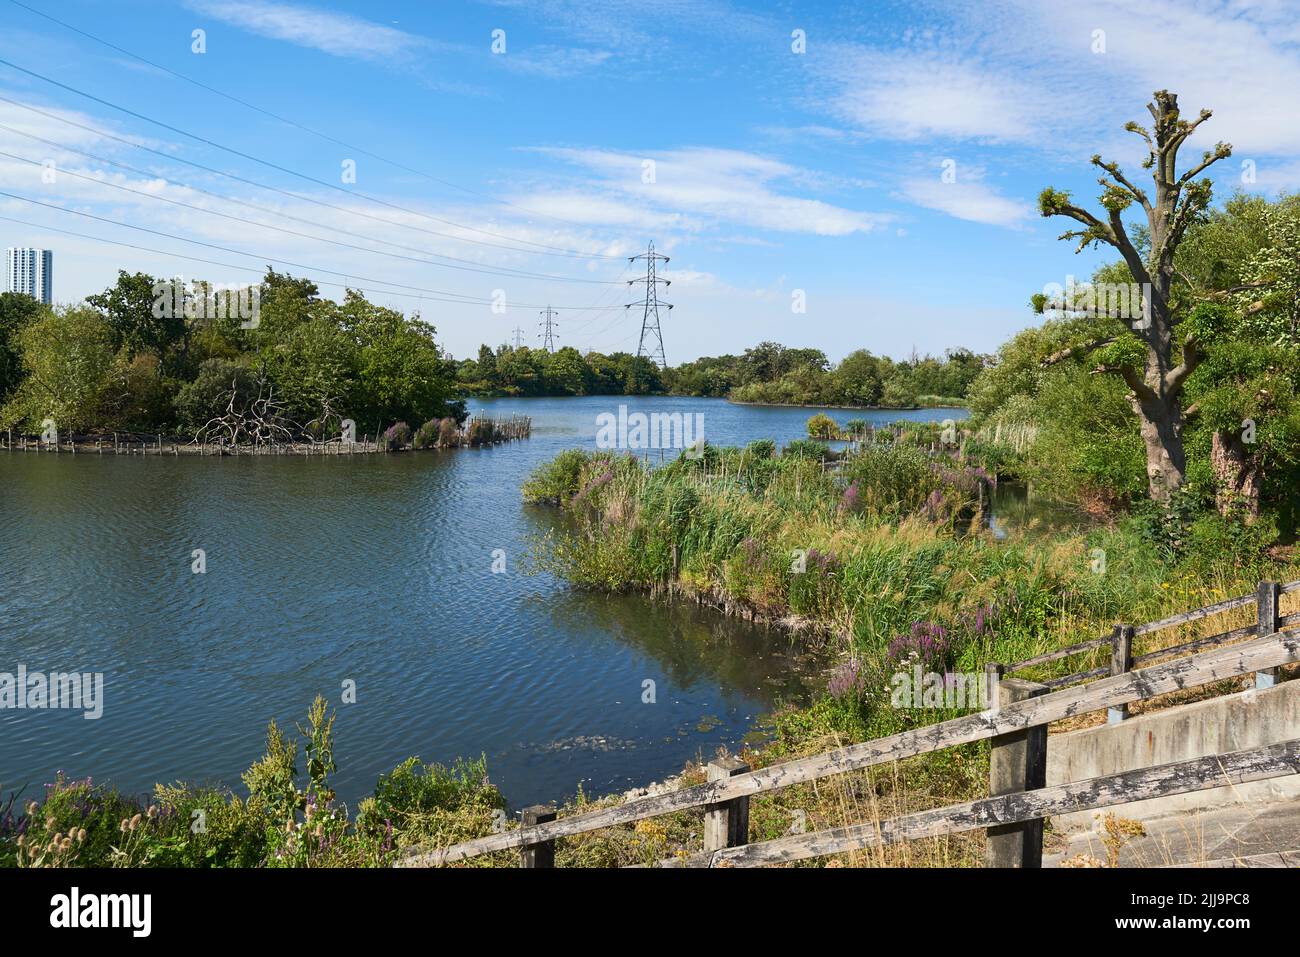 Reservoir sulle Walthamstow Wetlands in estate, a nord di Londra, nel sud-est dell'Inghilterra Foto Stock